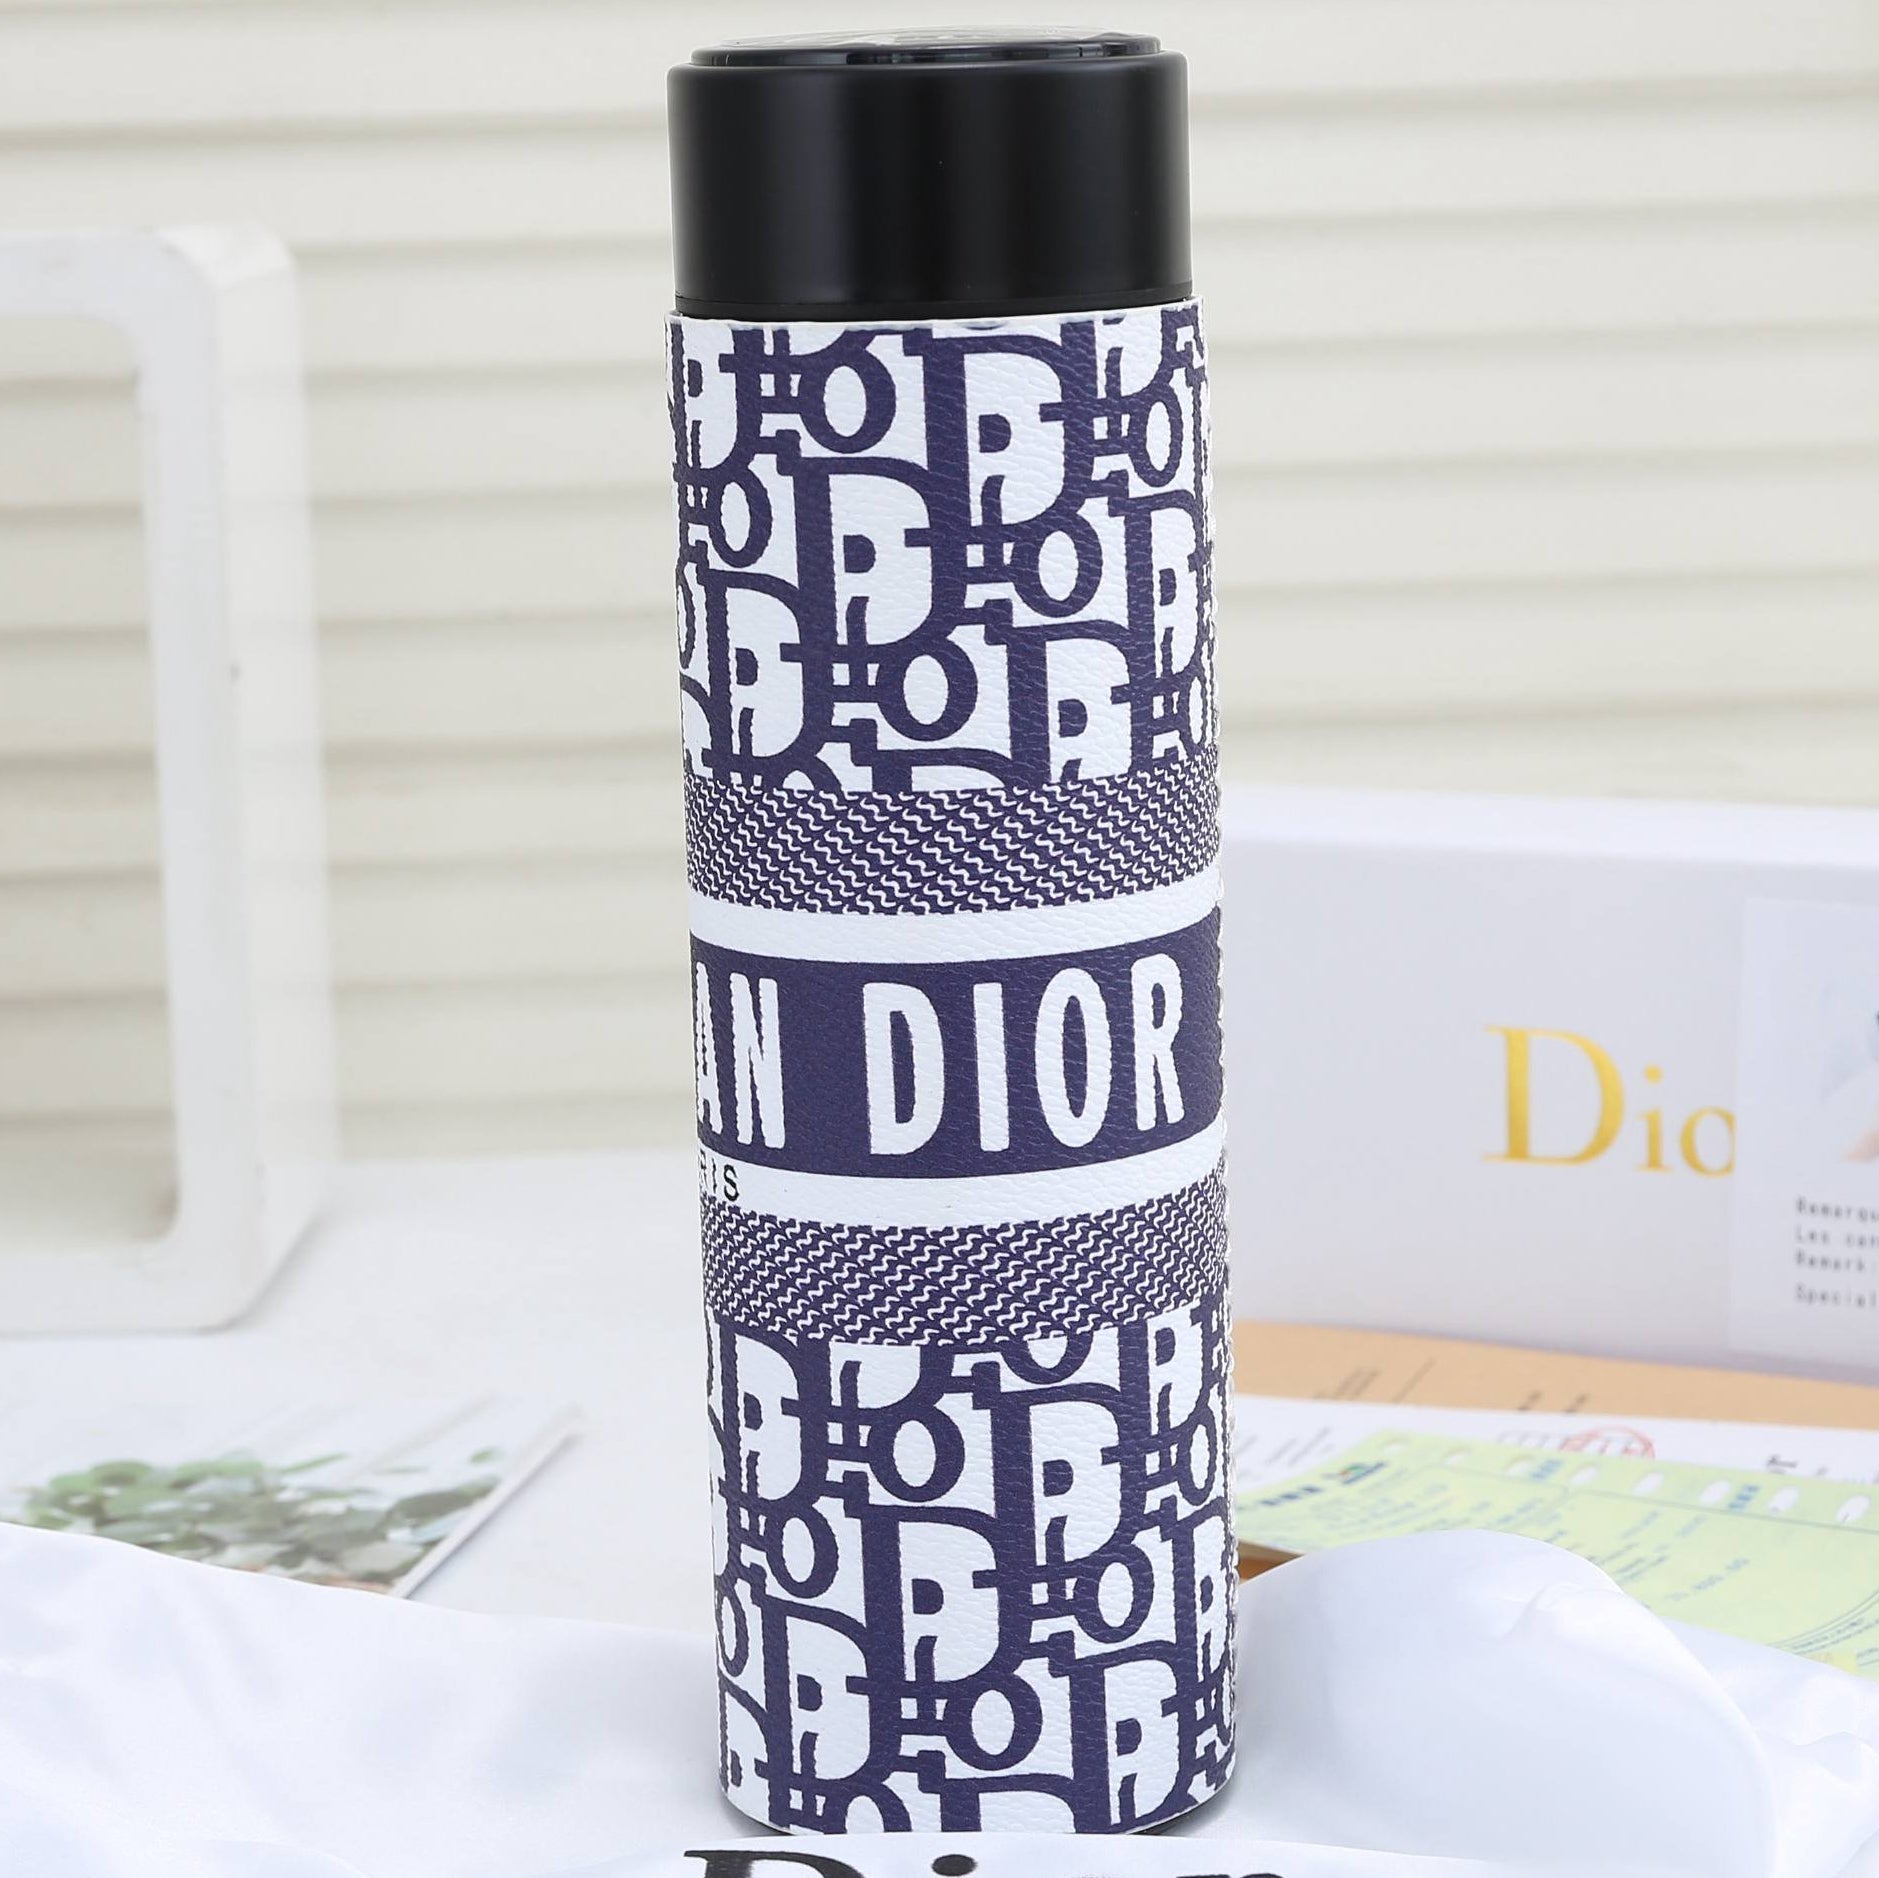 Christian Dior Intelligent Digital Display Water Cup Temperature